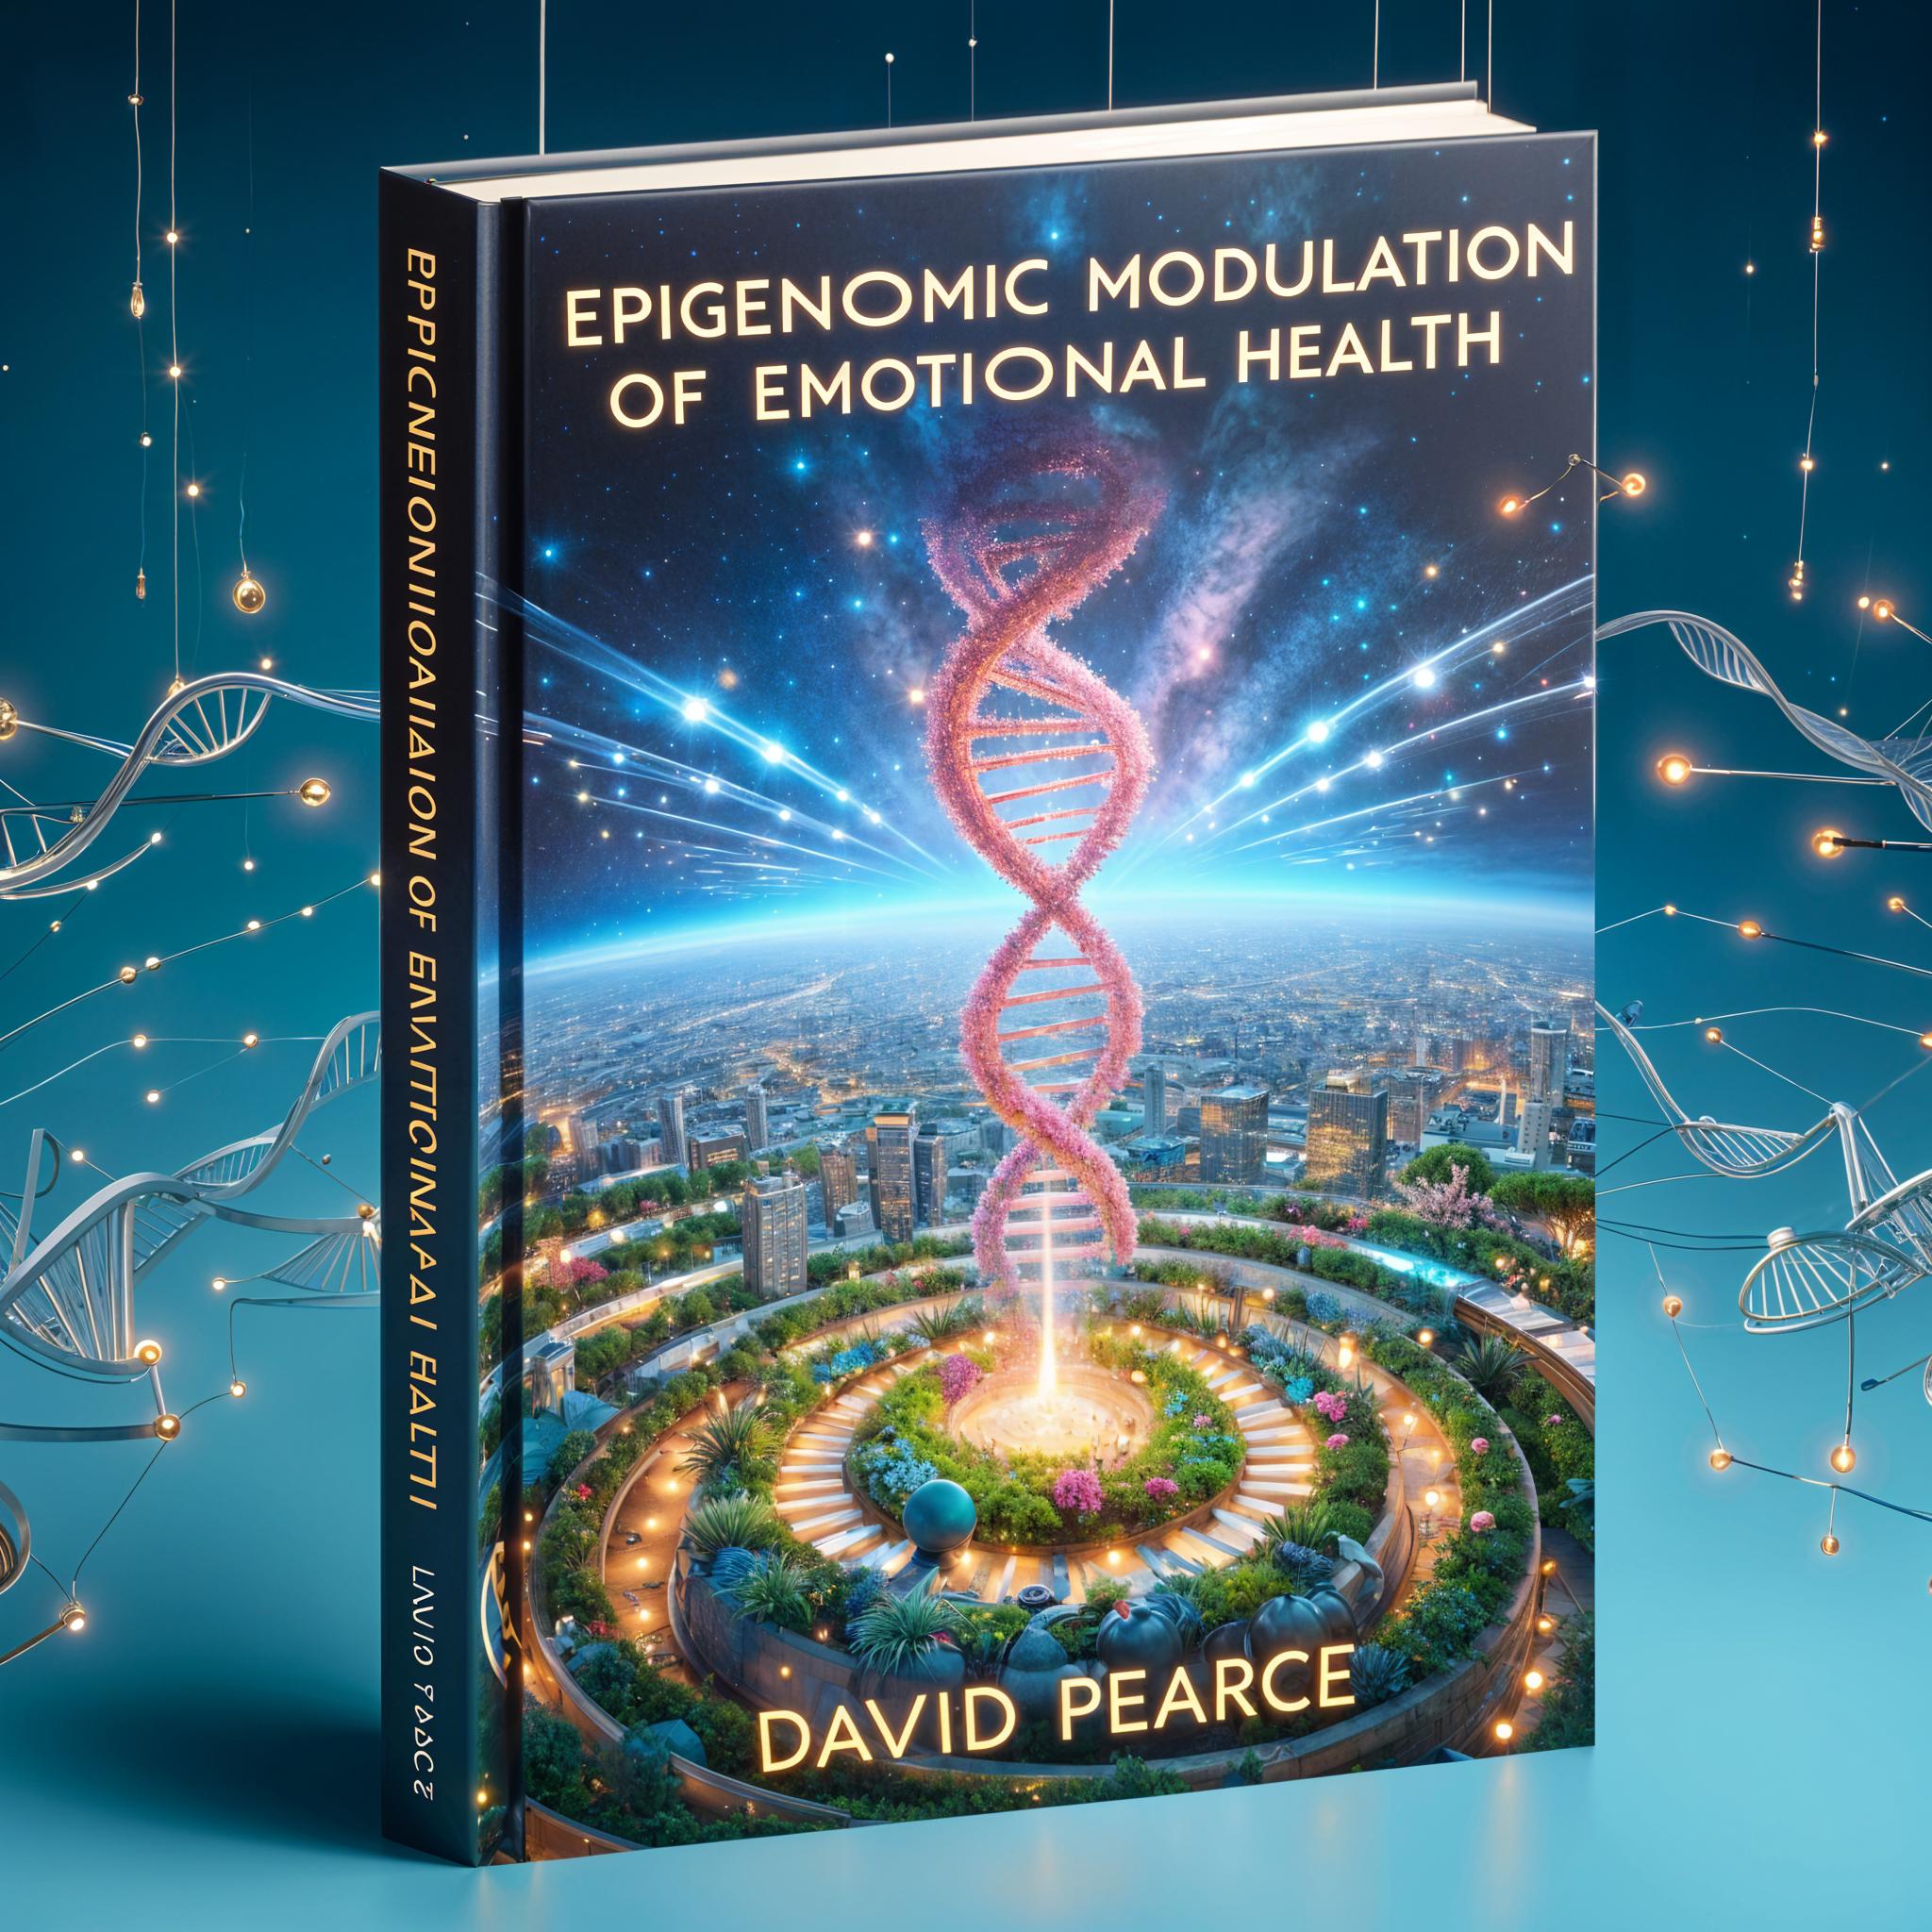 Epigenomic Modulation of Emotional Health by David Pearce